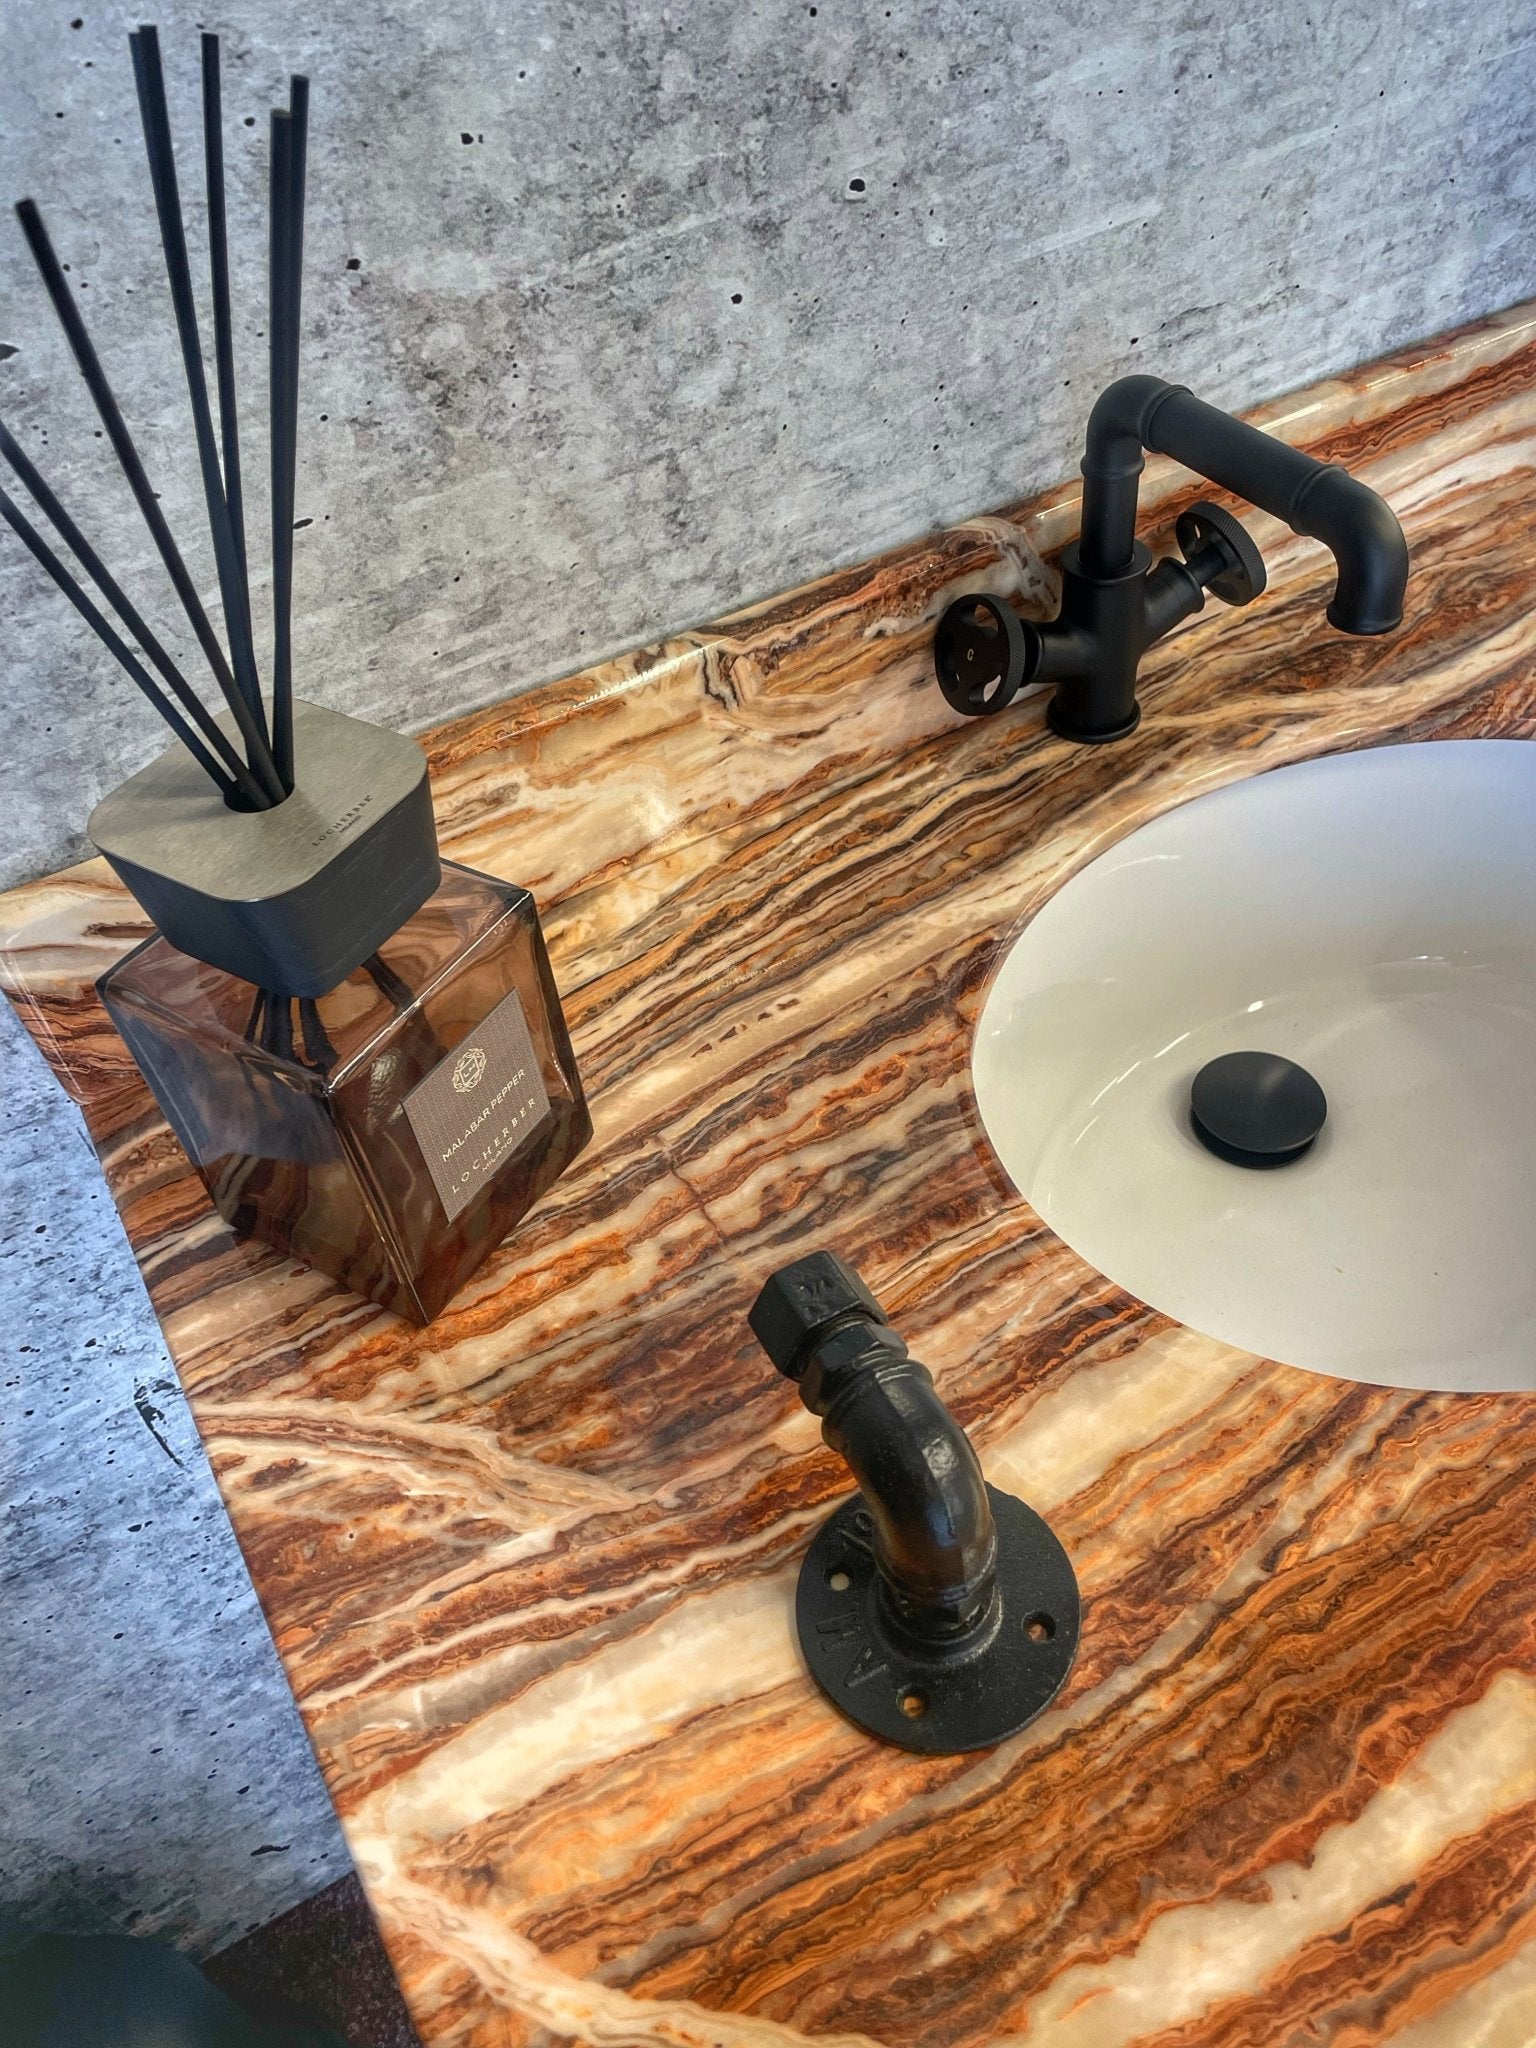 Black Matte Industrial Two Handles Basin Faucet - |VESIMI Design| Luxury and Rustic bathrooms online